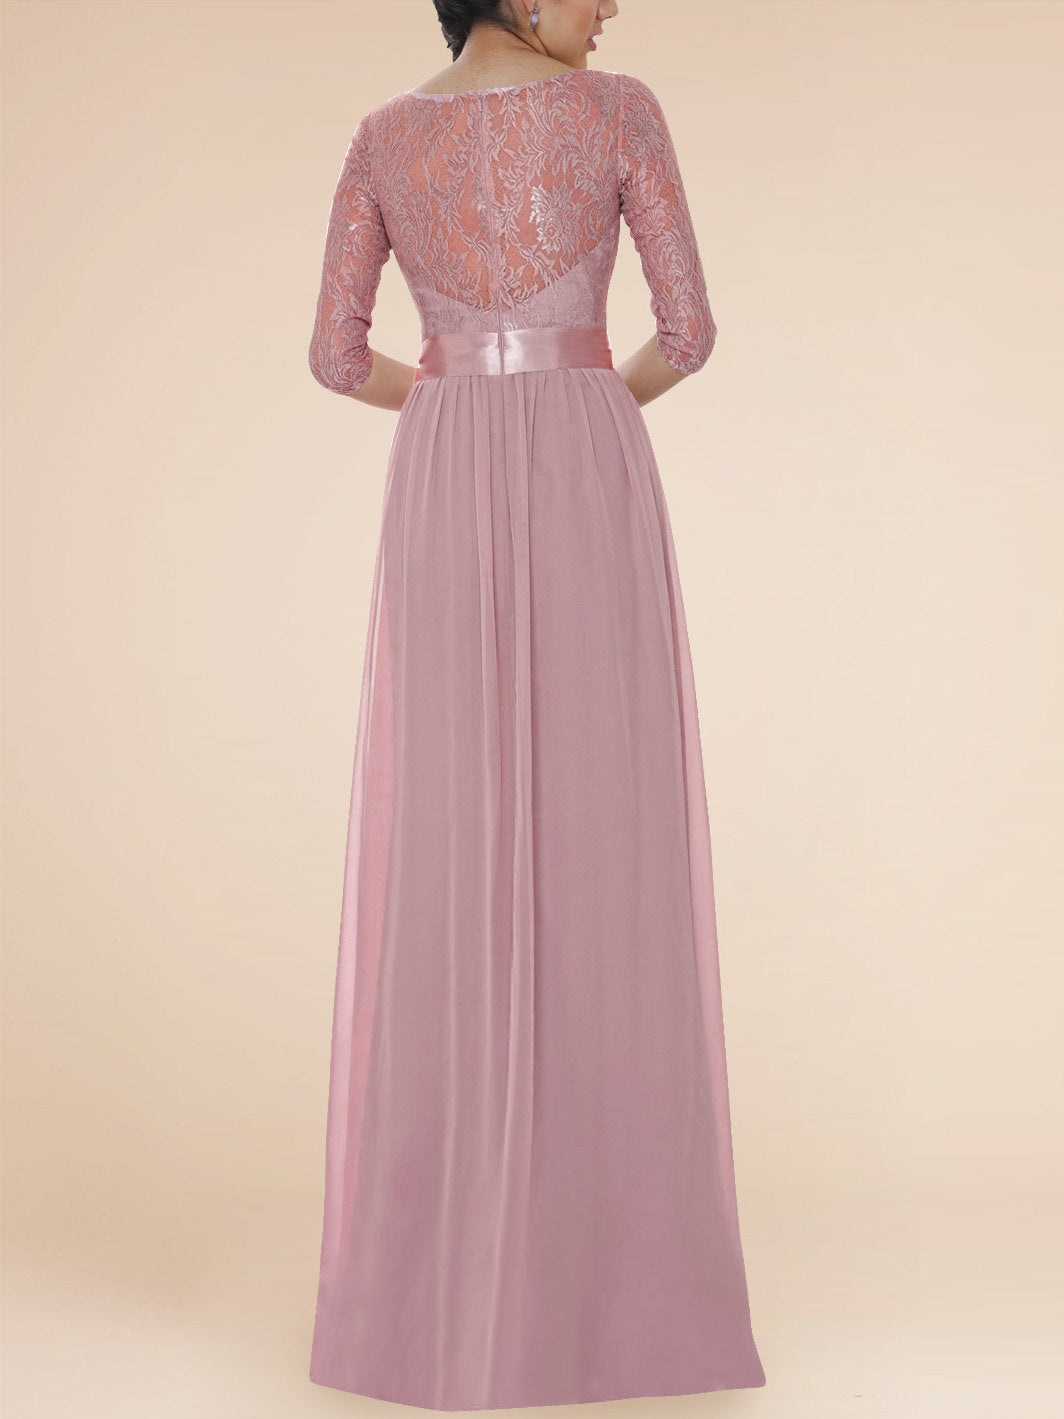 Lace Criss Cross Straps Sleeveless Bridesmaid Dress| Plus Size | 60+ Colors